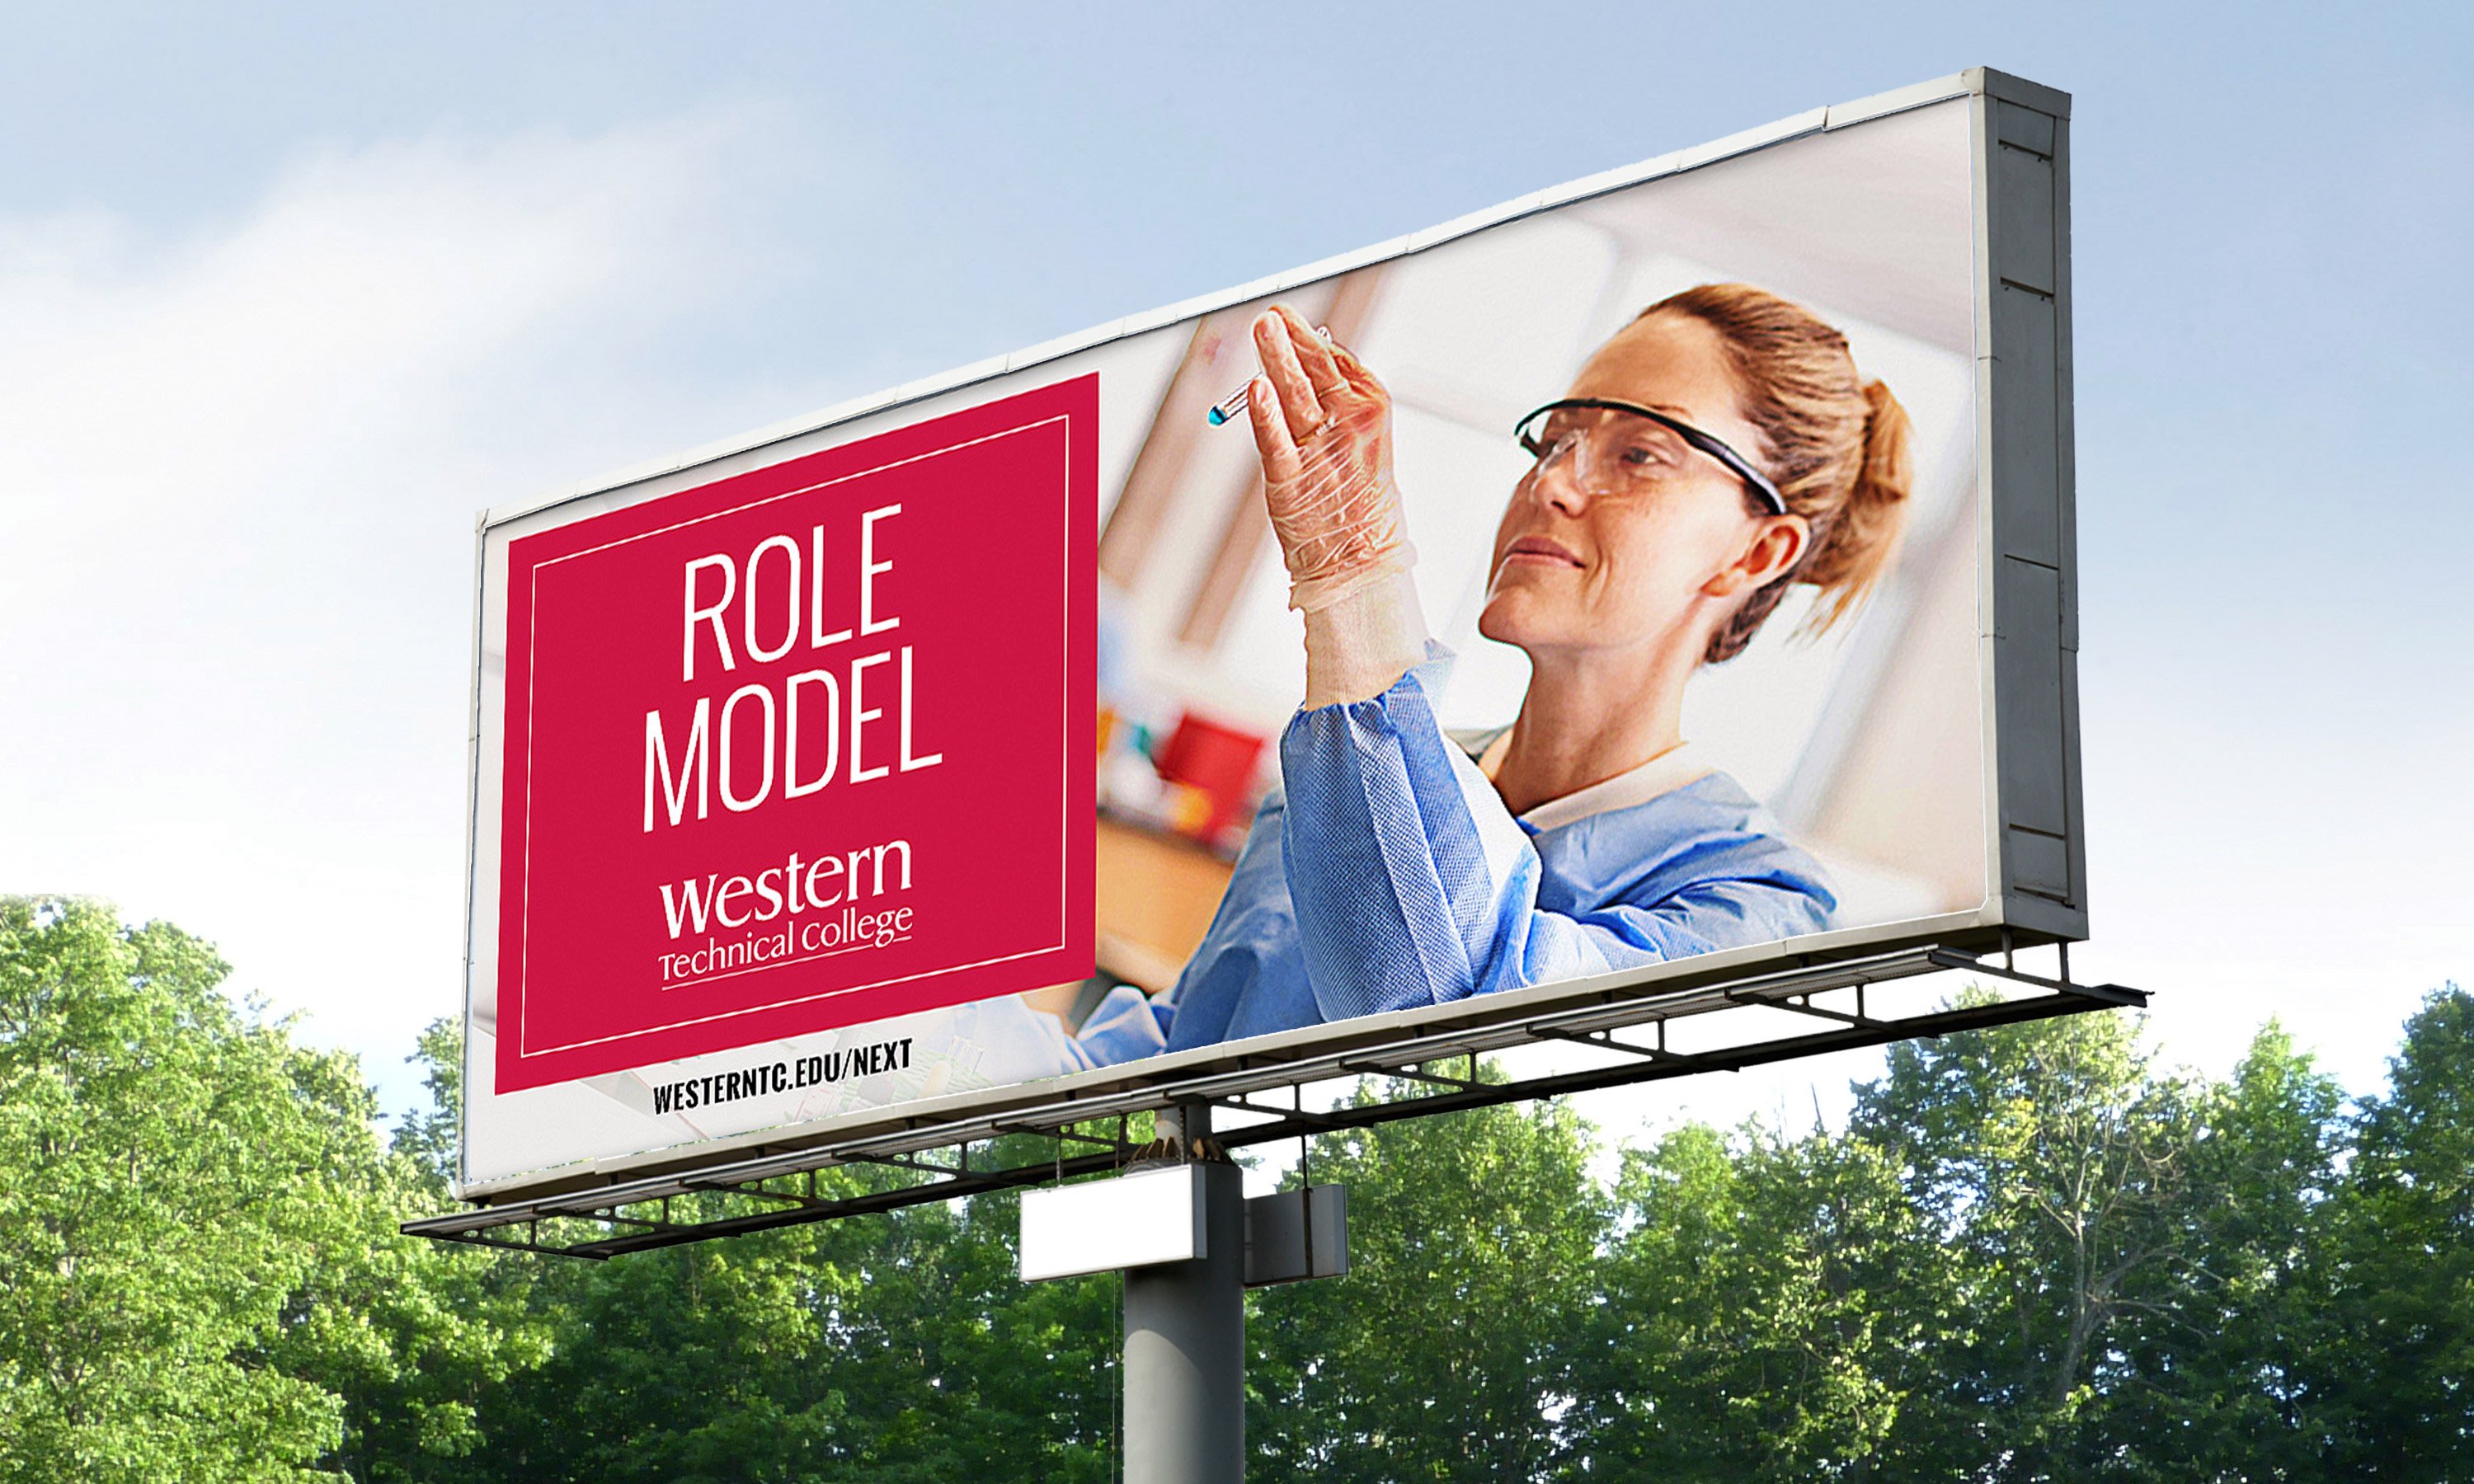 Western Technical College role model billboard with school logo, female student and Western T C dot edu slash next URL